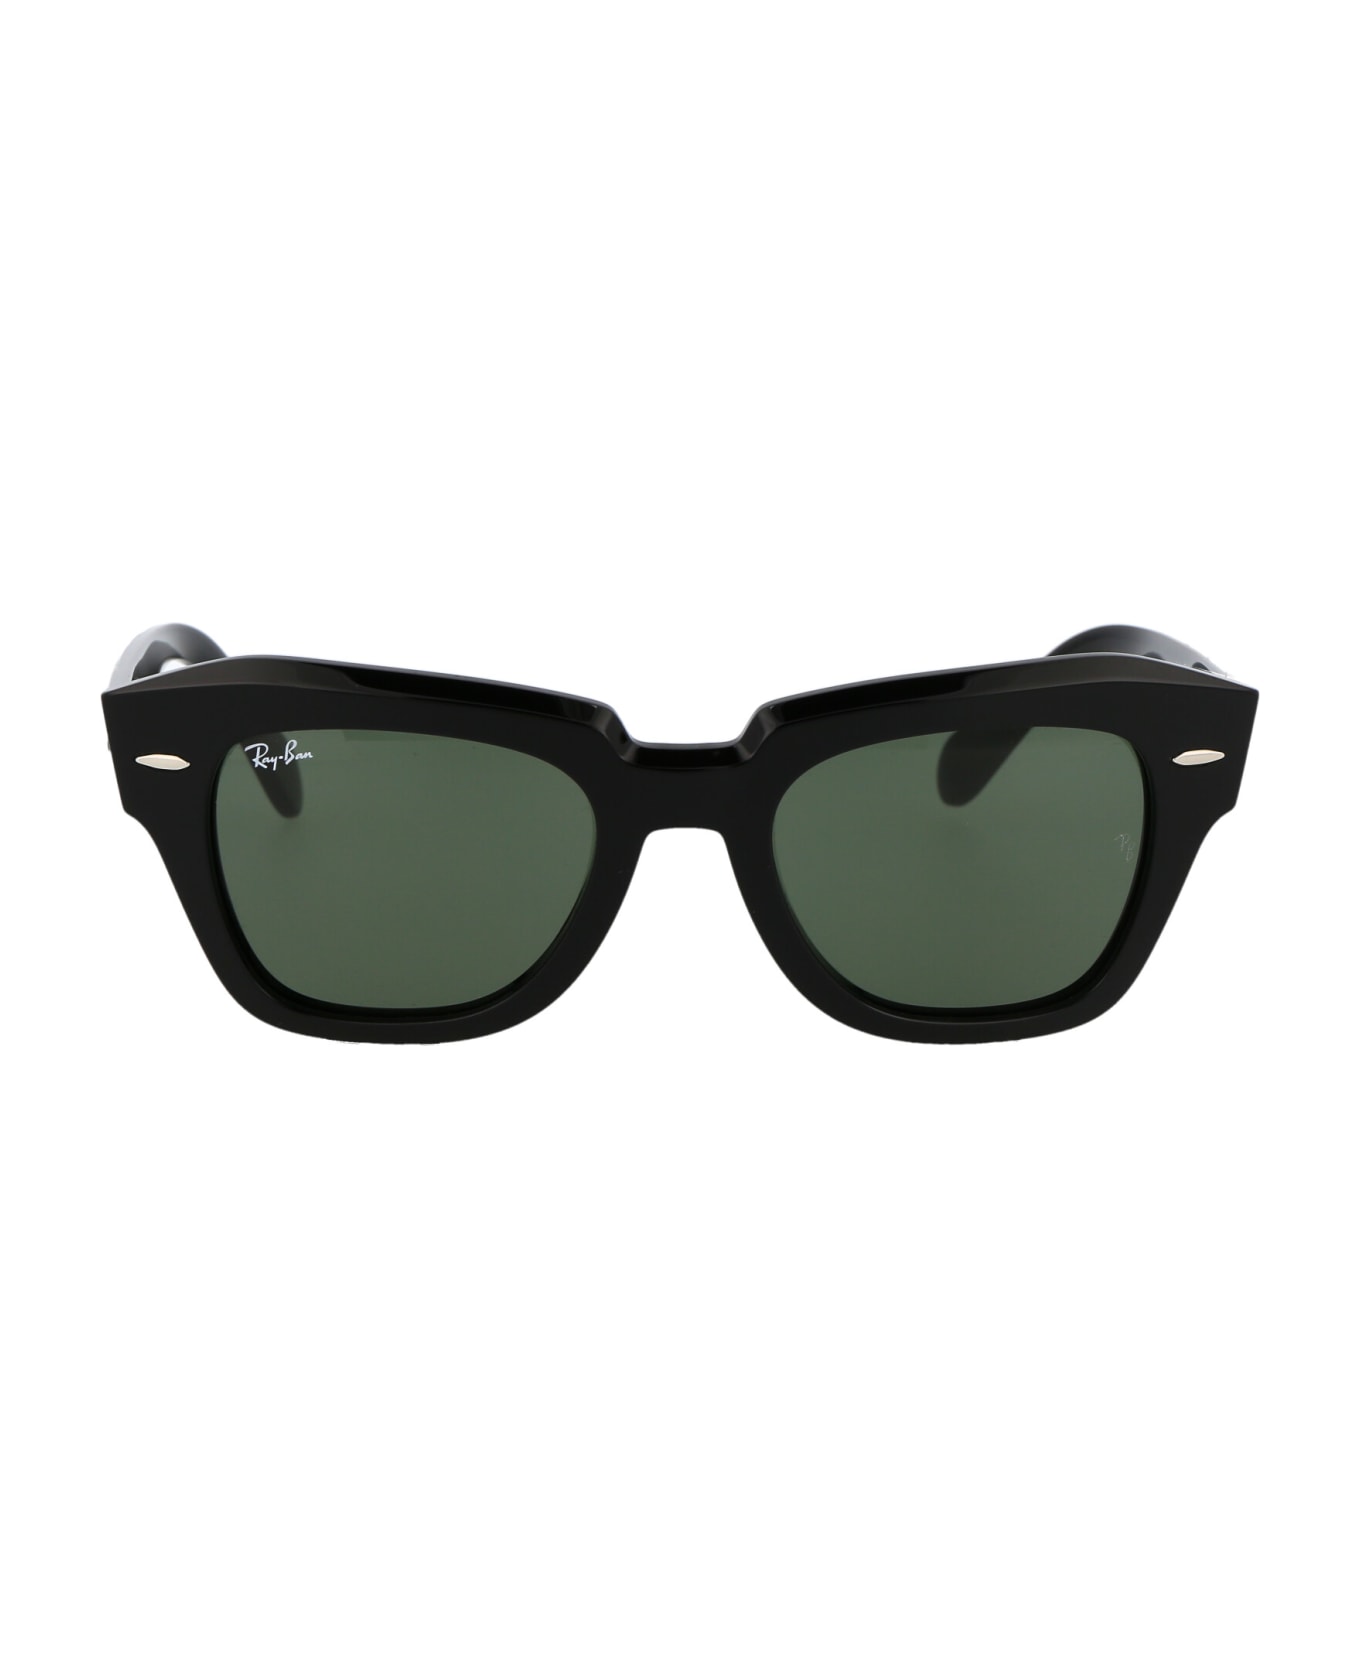 Ray-Ban State Street Sunglasses - 901/31 BLACK